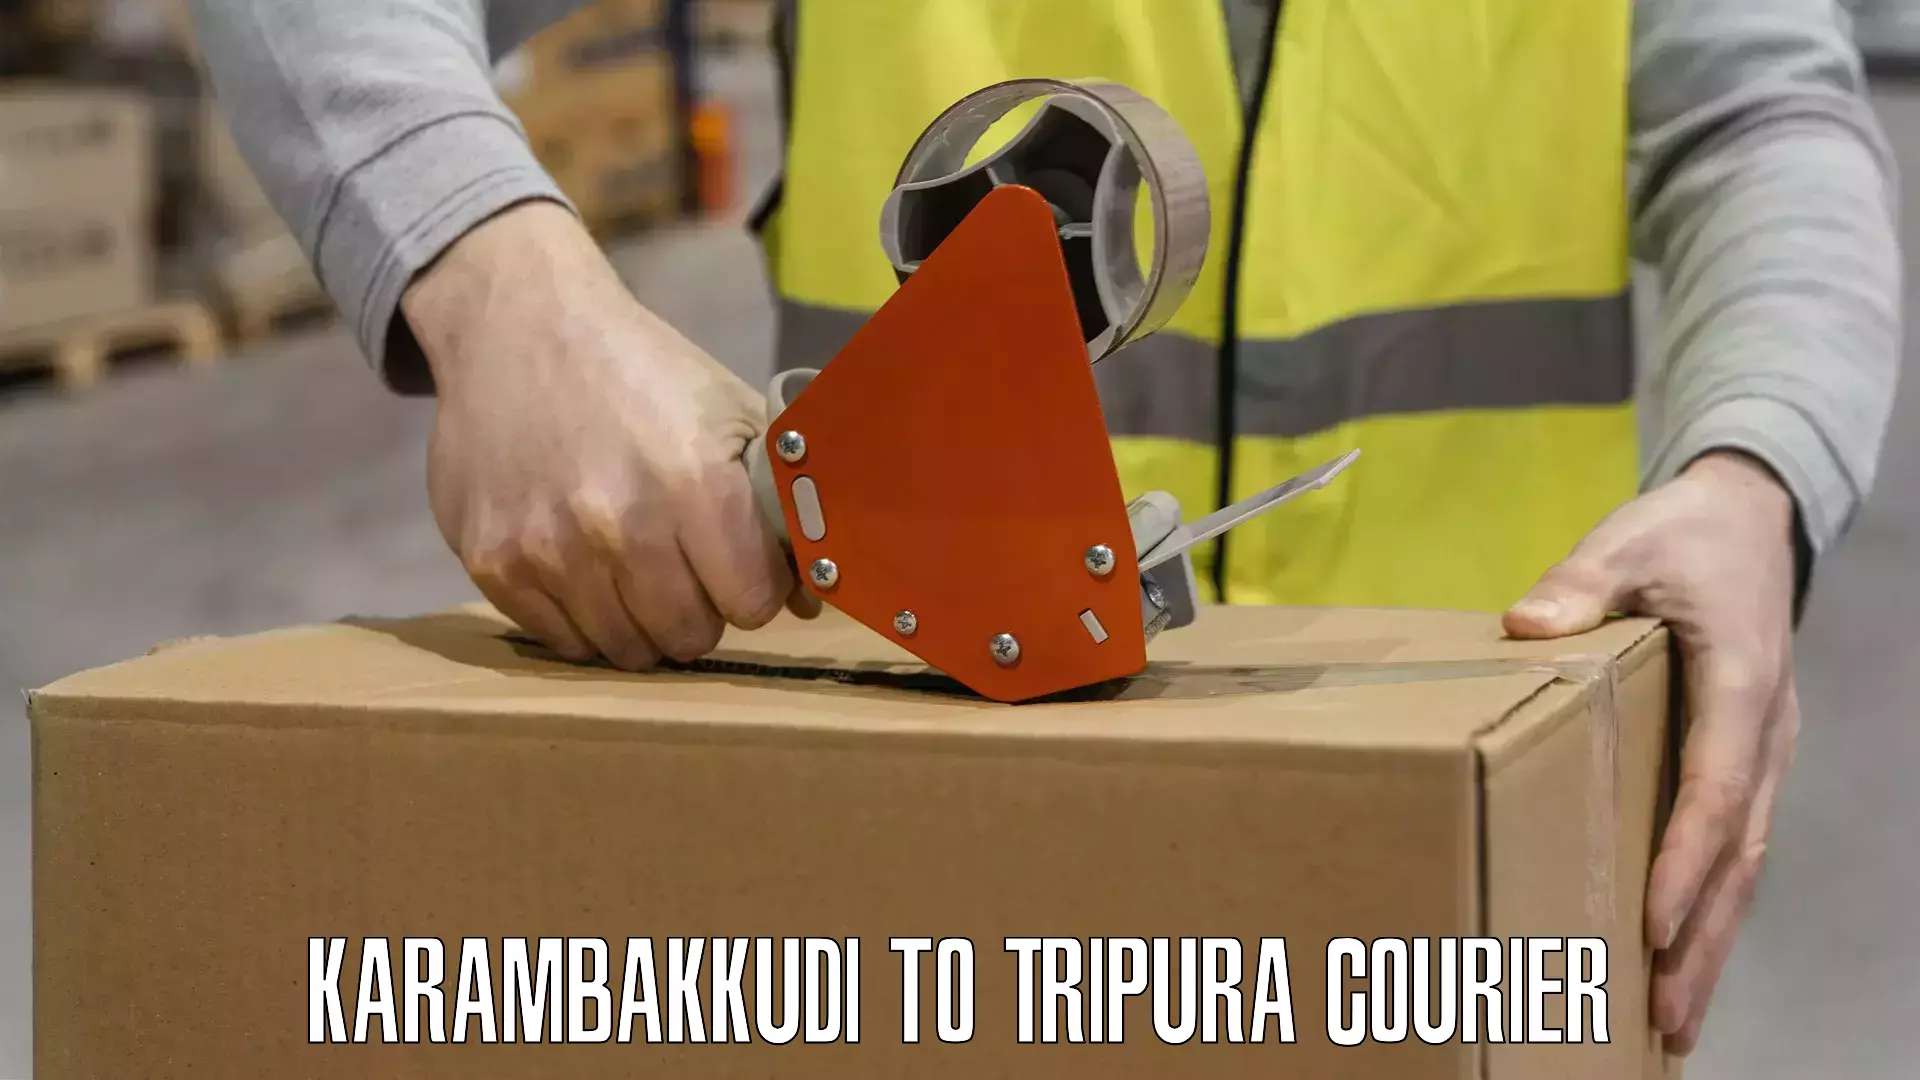 User-friendly delivery service Karambakkudi to West Tripura